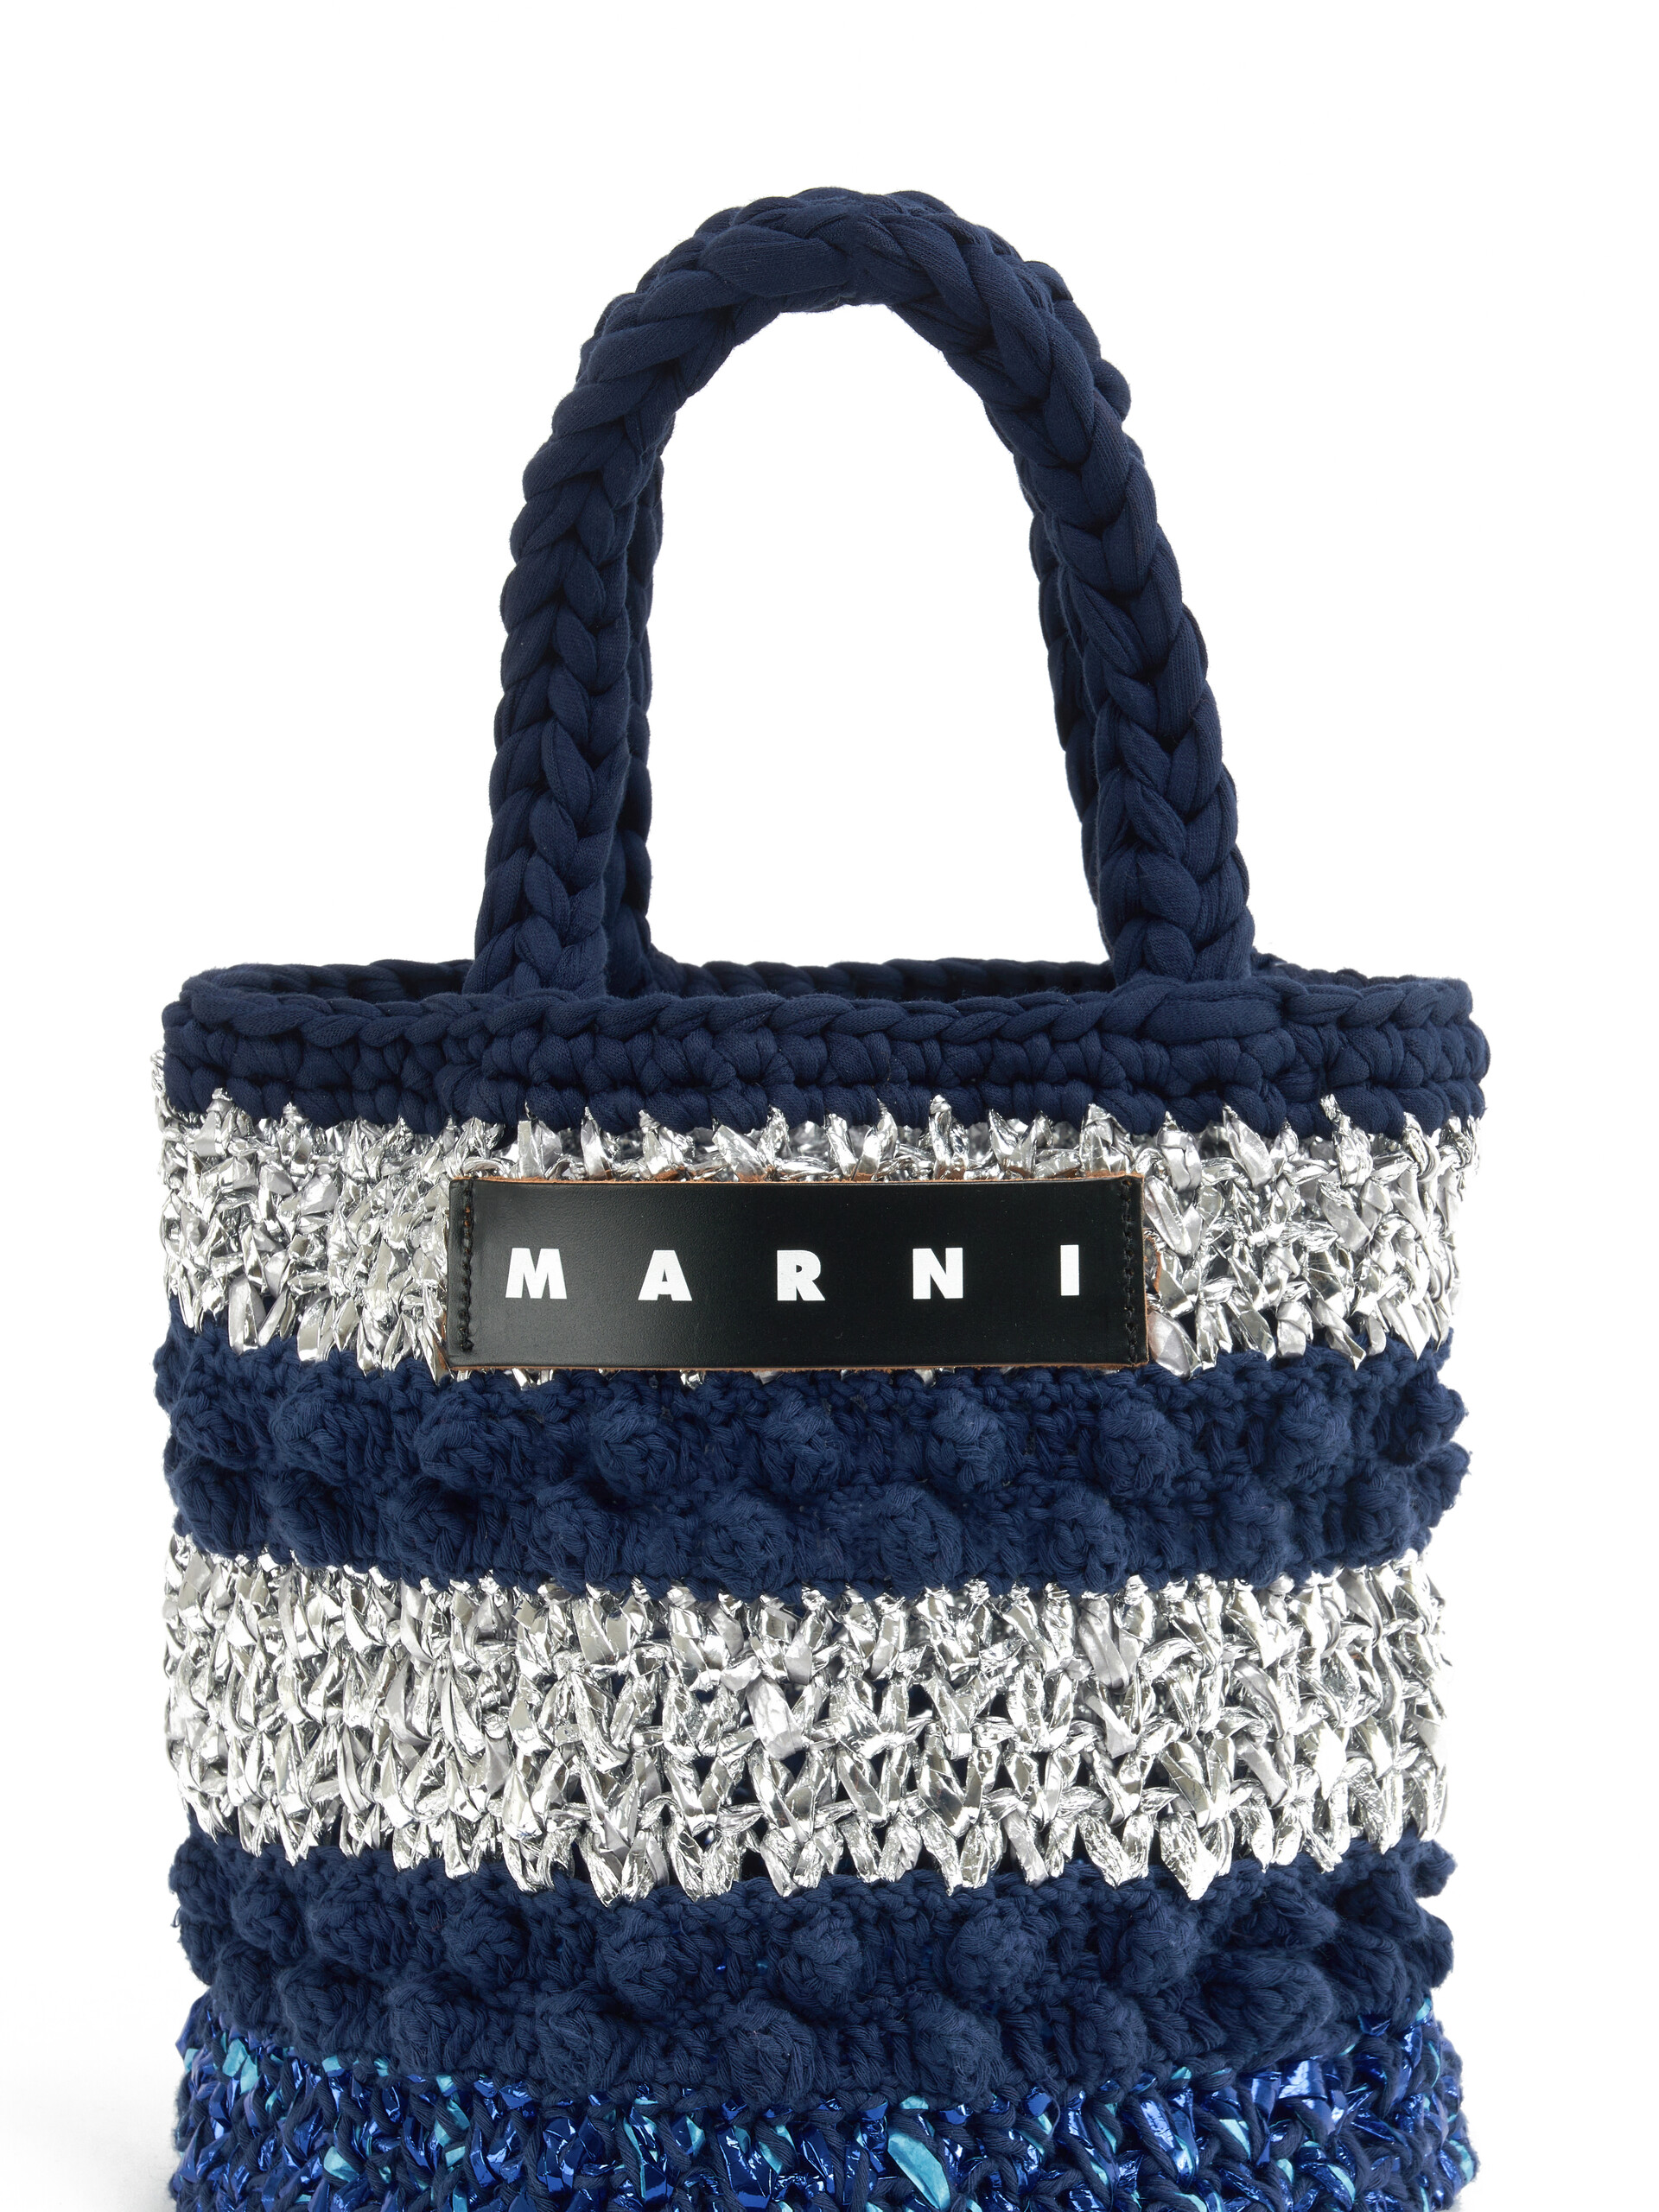 Deep blue and silver bobble-knit MARNI MARKET BUCKET bag